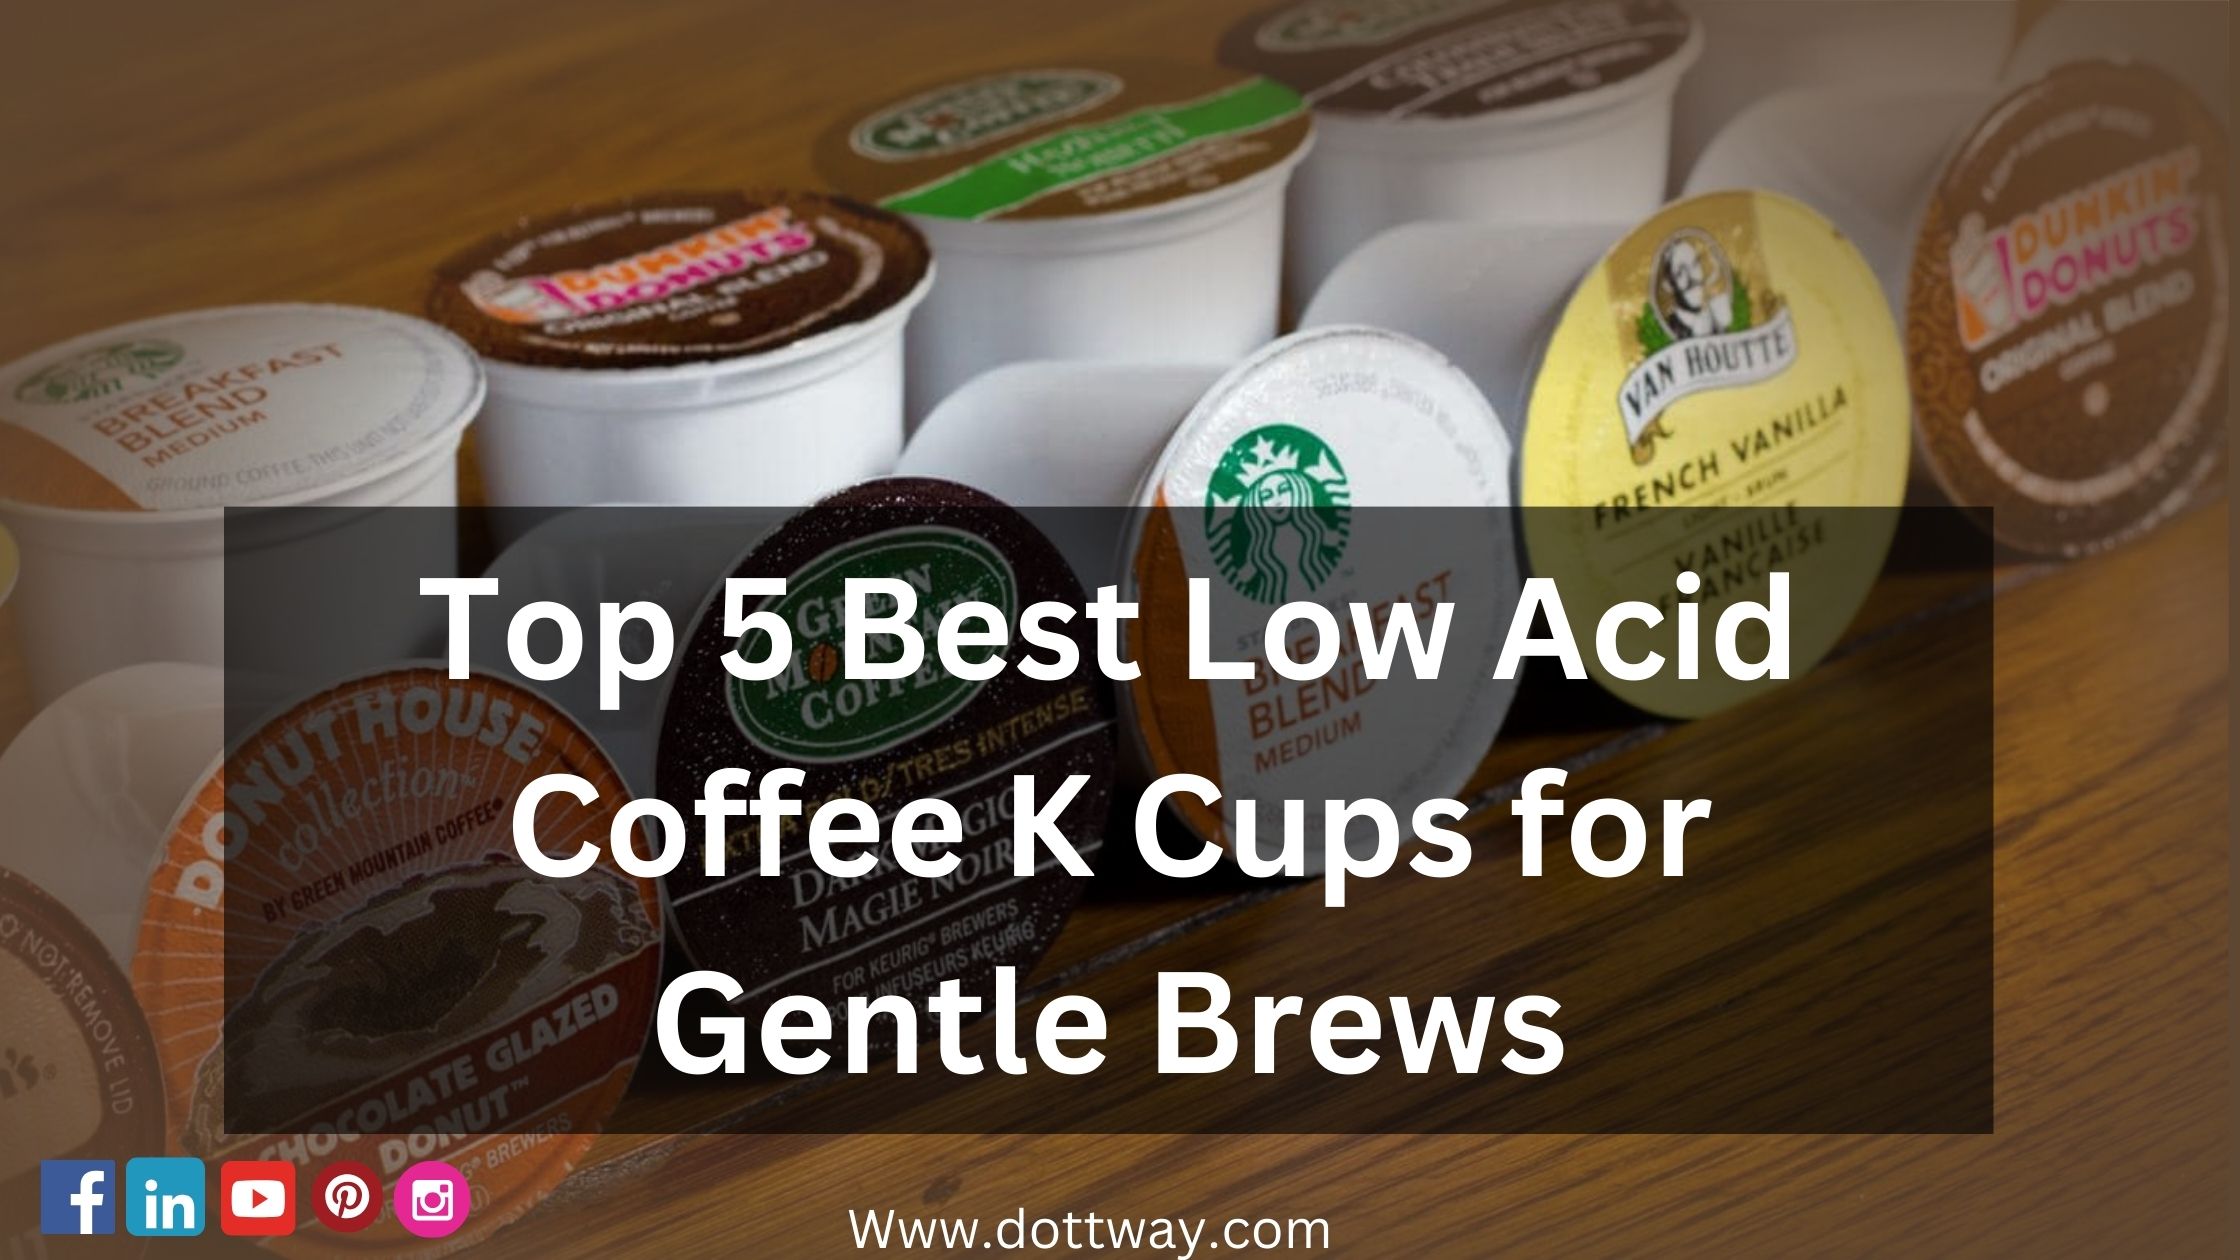 Top 5 Best Low Acid Coffee K Cups for Gentle Brews